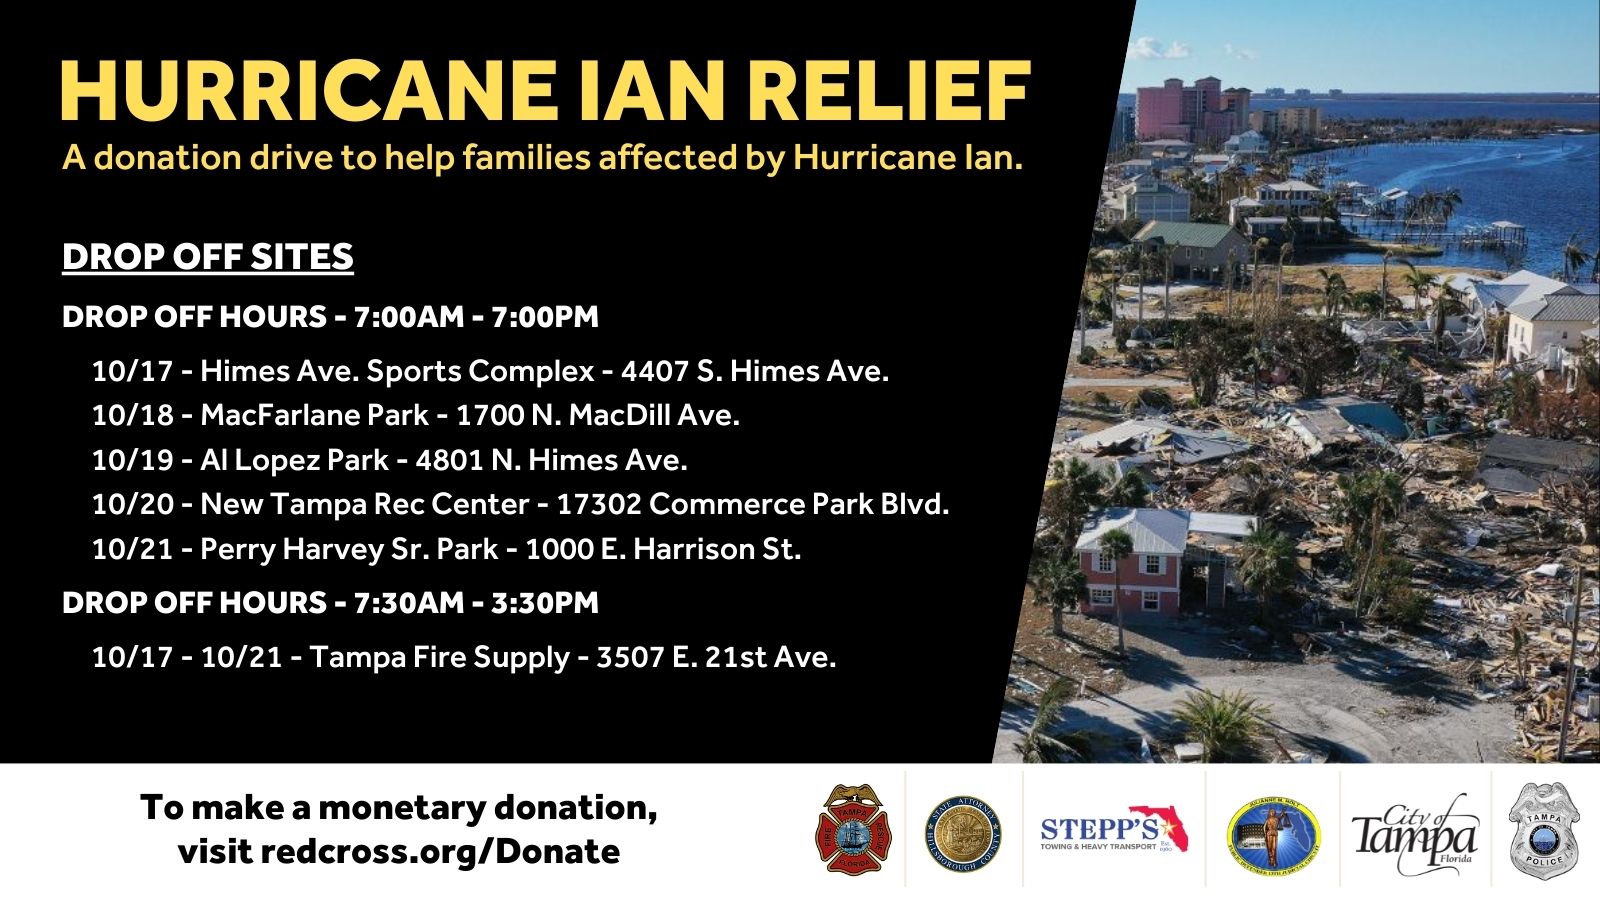 Hurricane Ian relief